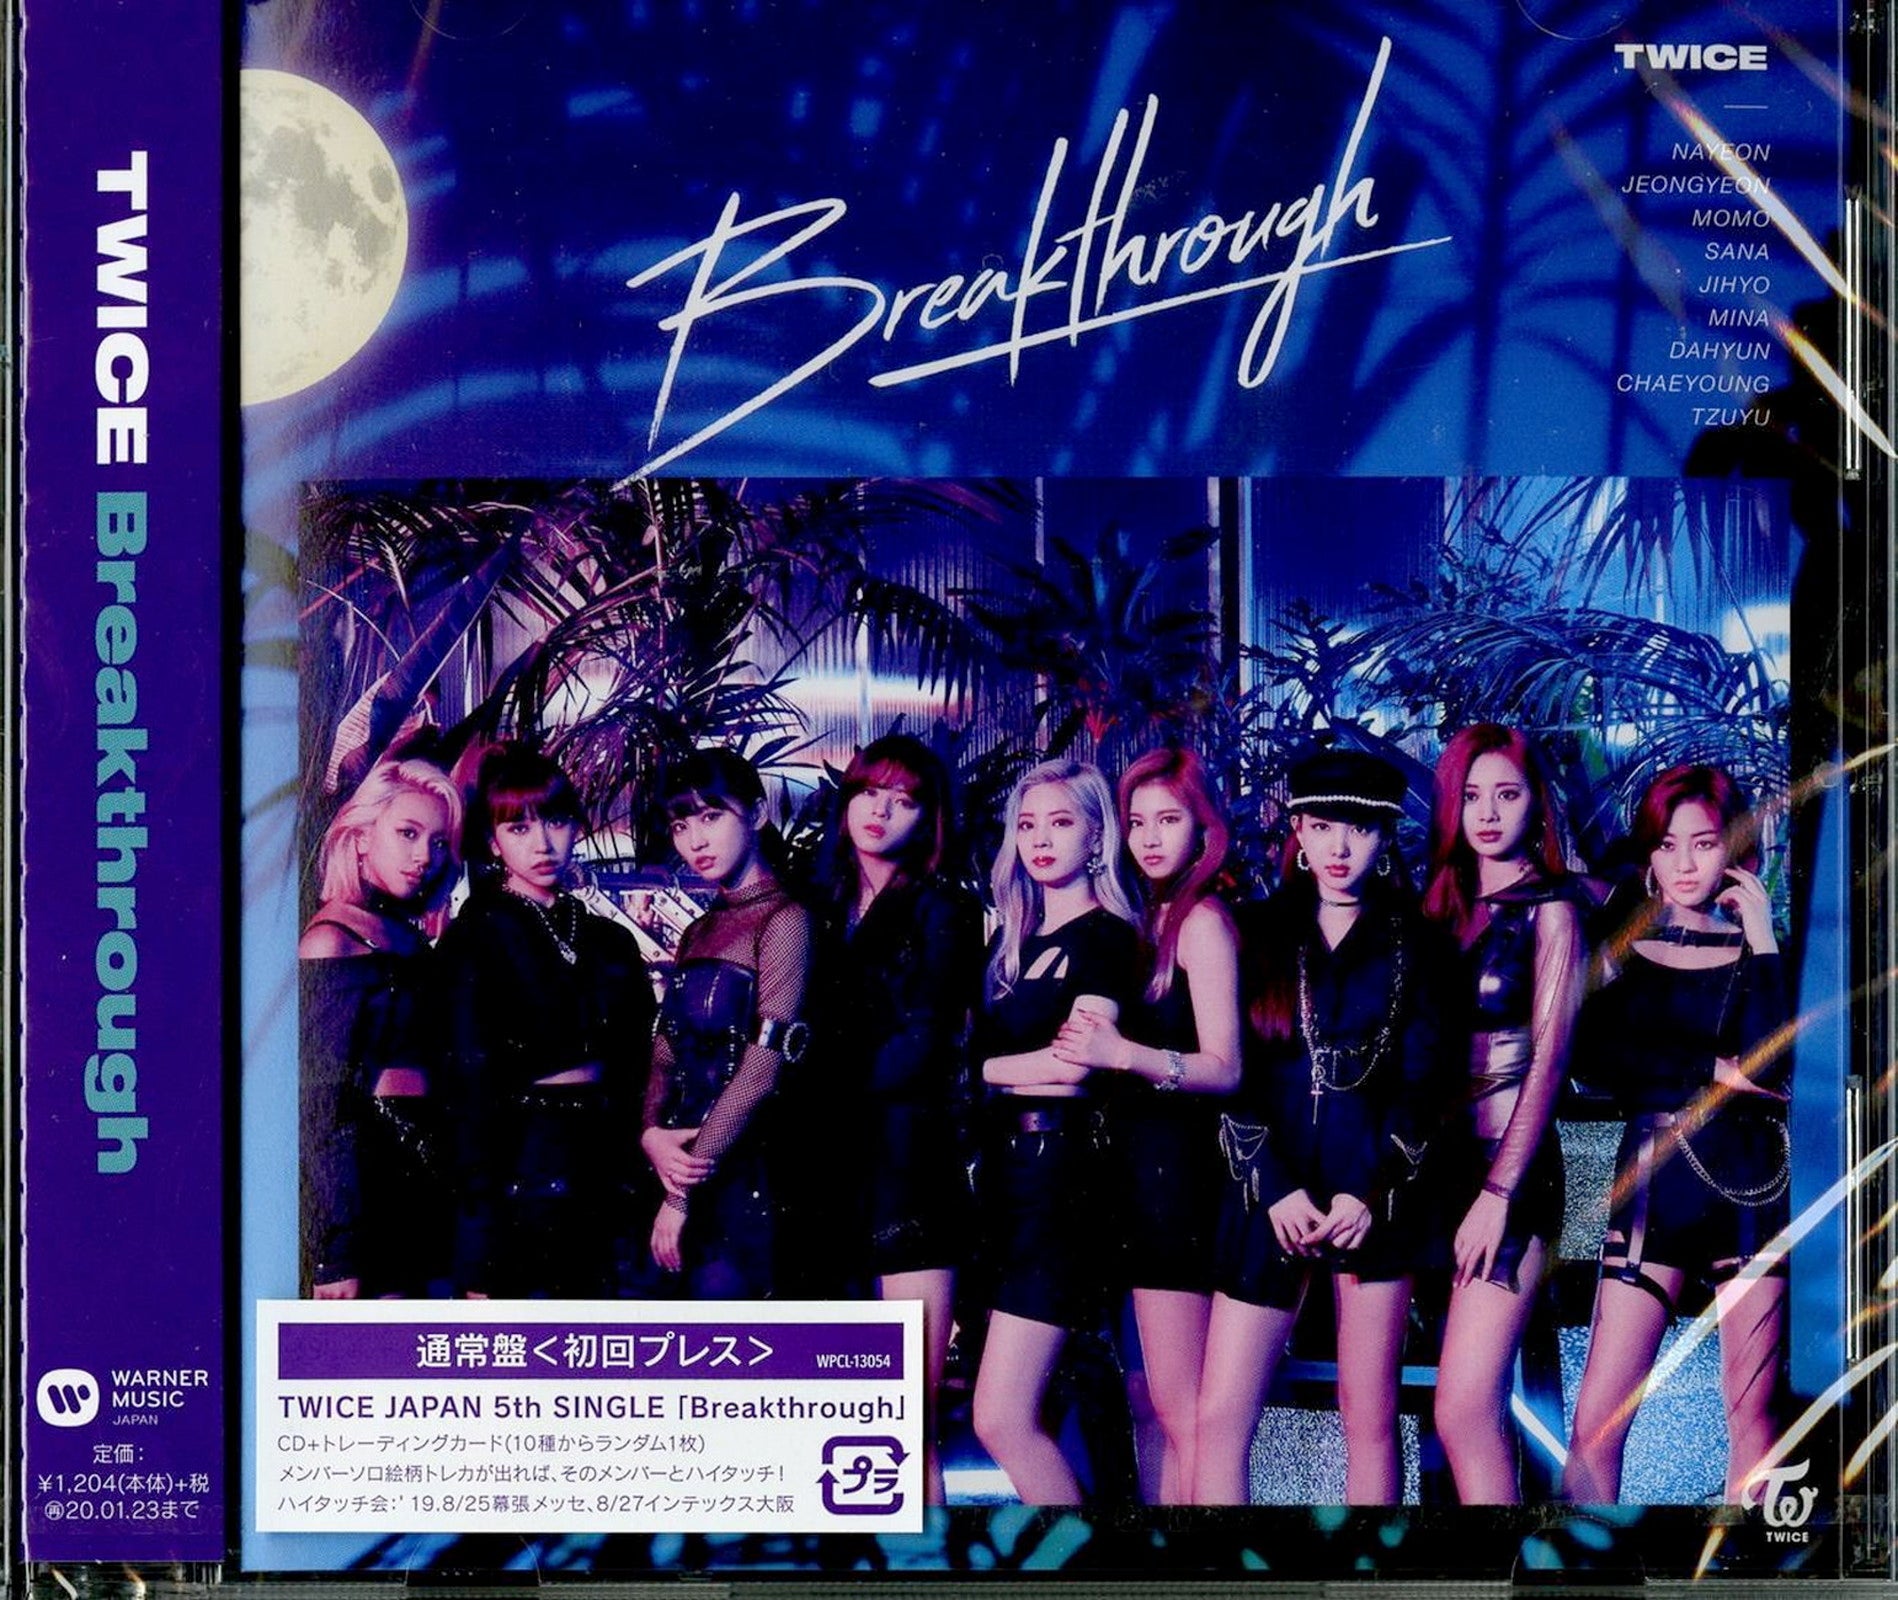 Twice - Breakthrough - Japan CD – CDs Vinyl Japan Store